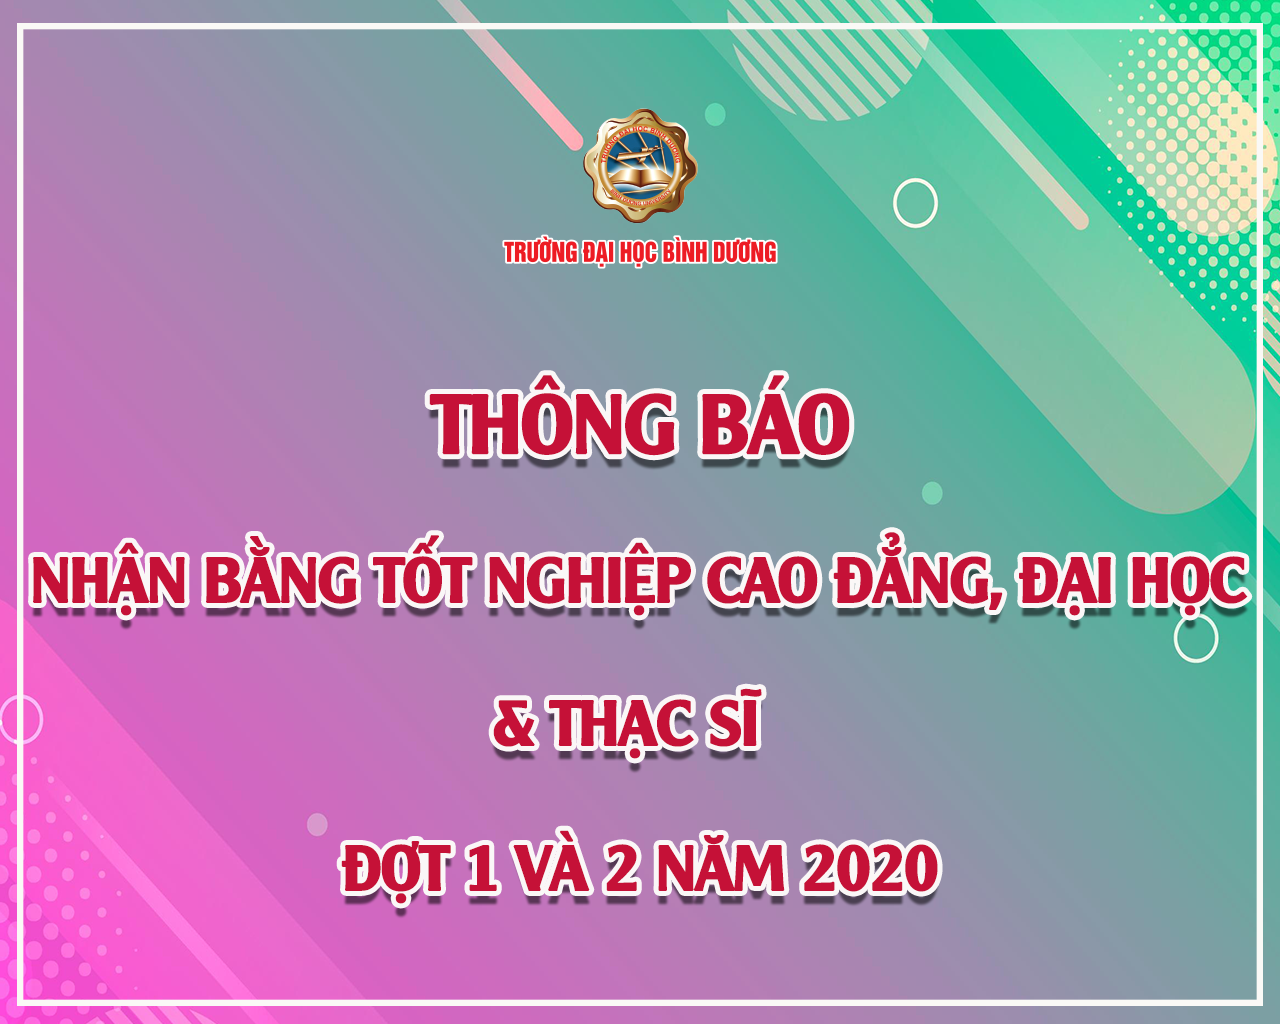 THong Bao1